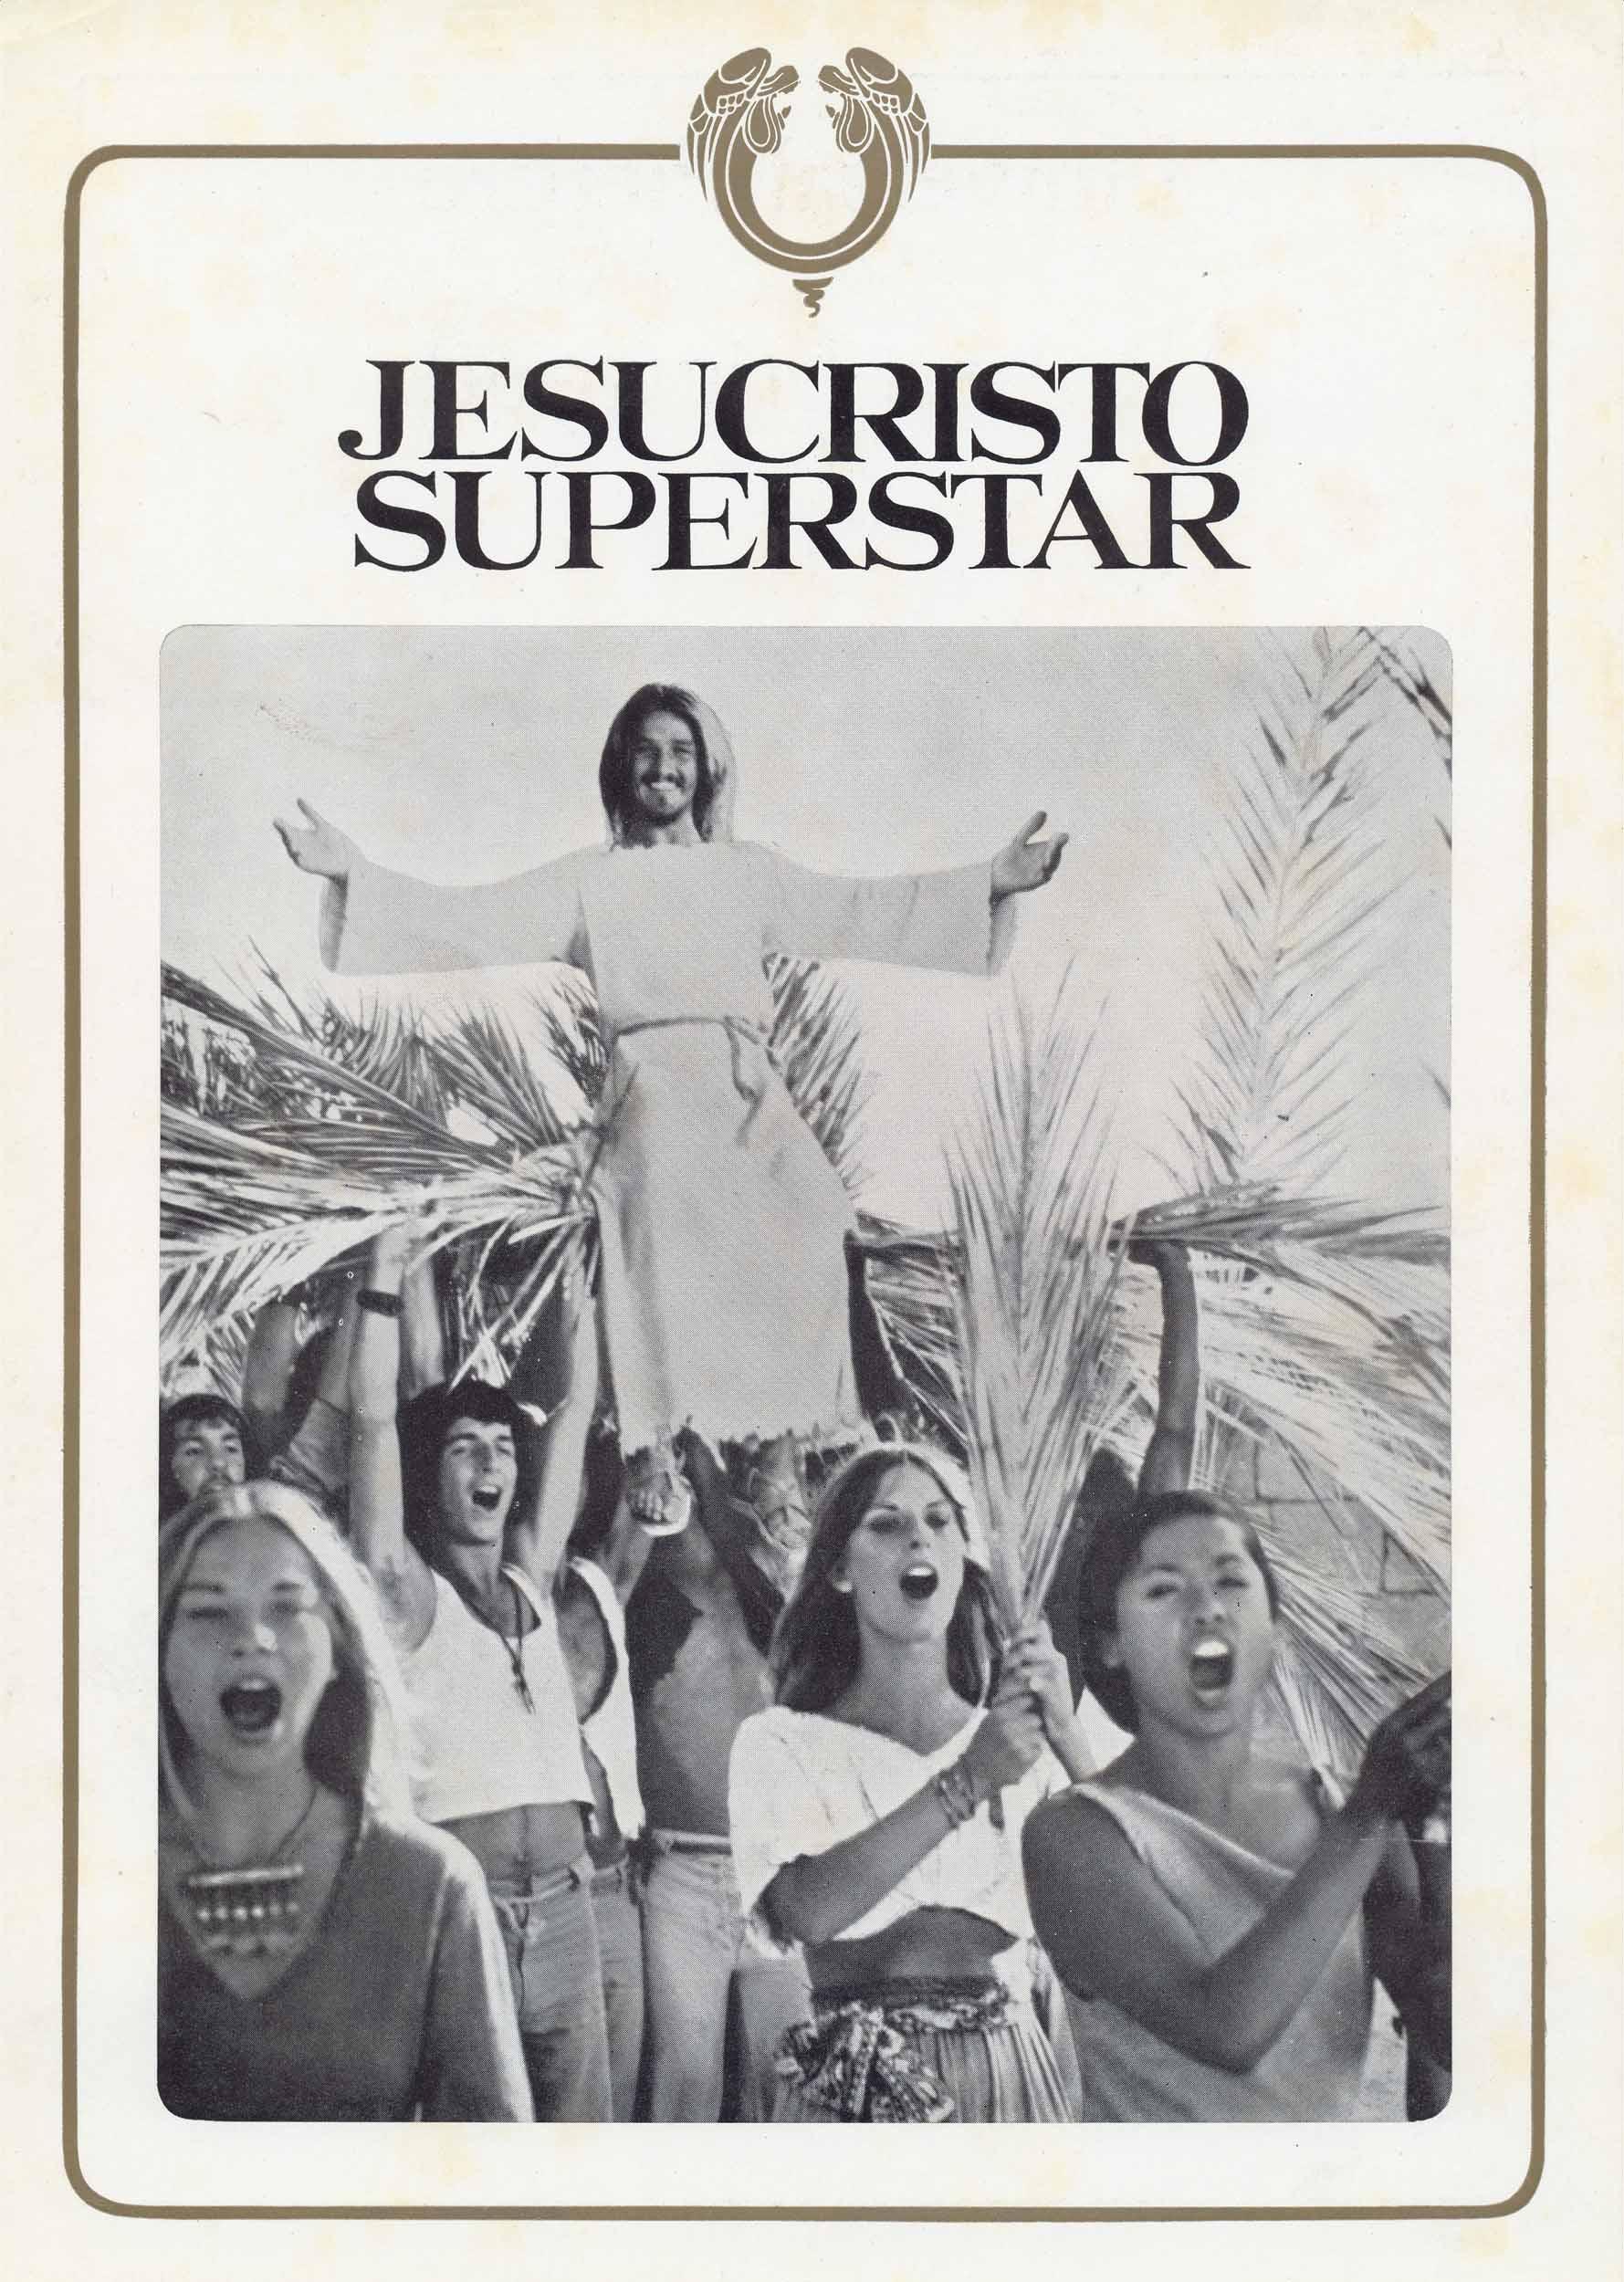 Постер фильма Иисус Христос - Cуперзвезда | Jesus Christ Superstar